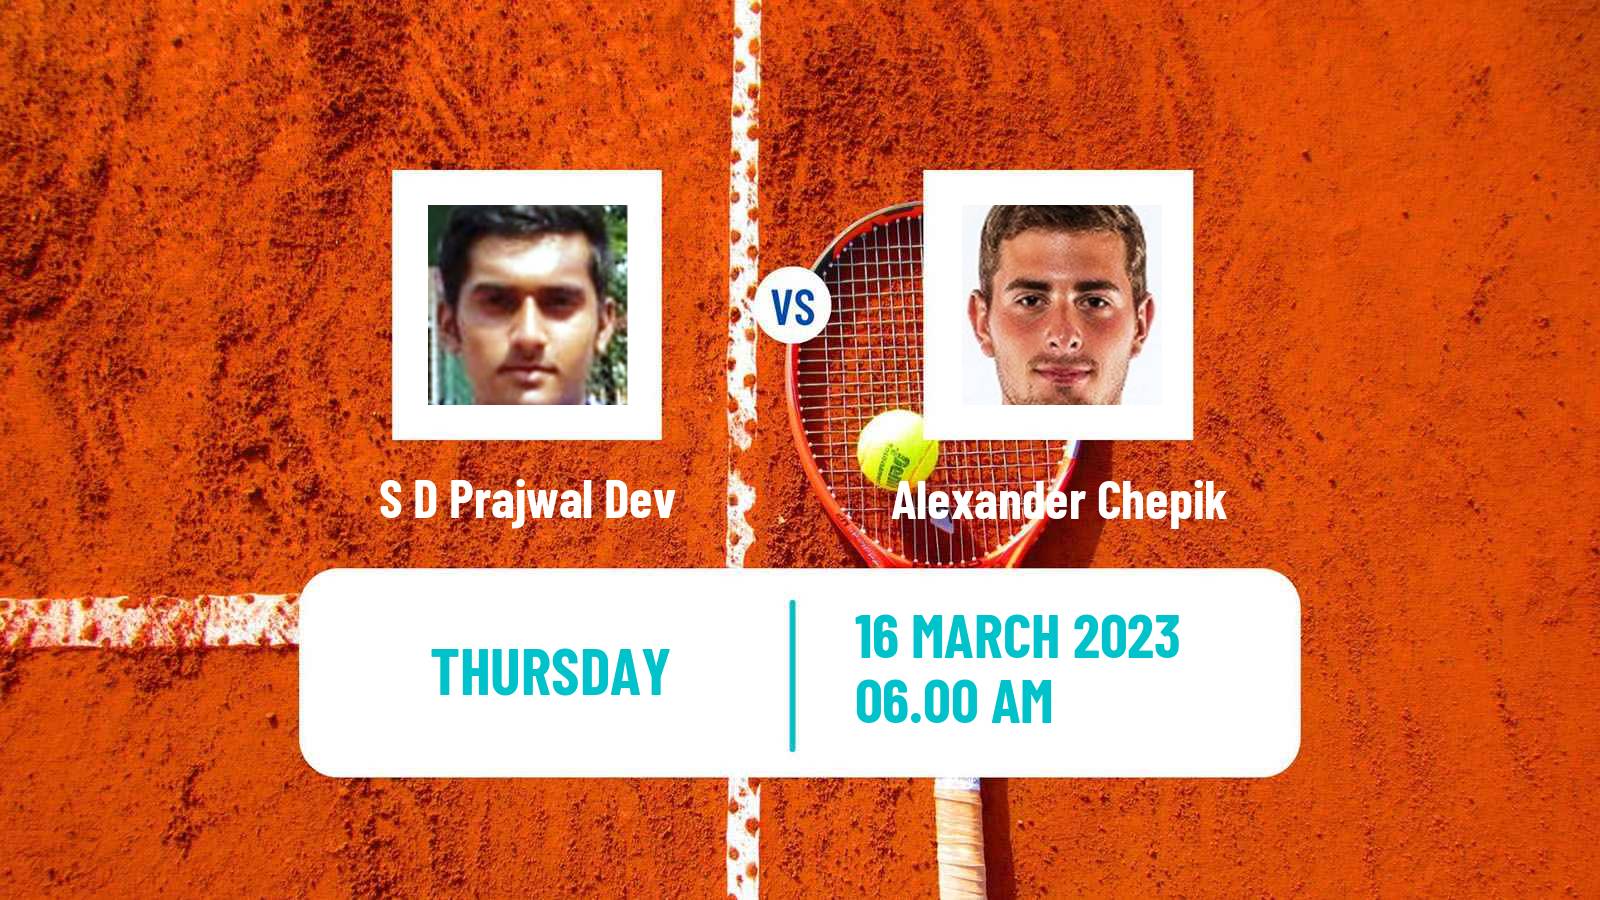 Tennis ITF Tournaments S D Prajwal Dev - Alexander Chepik